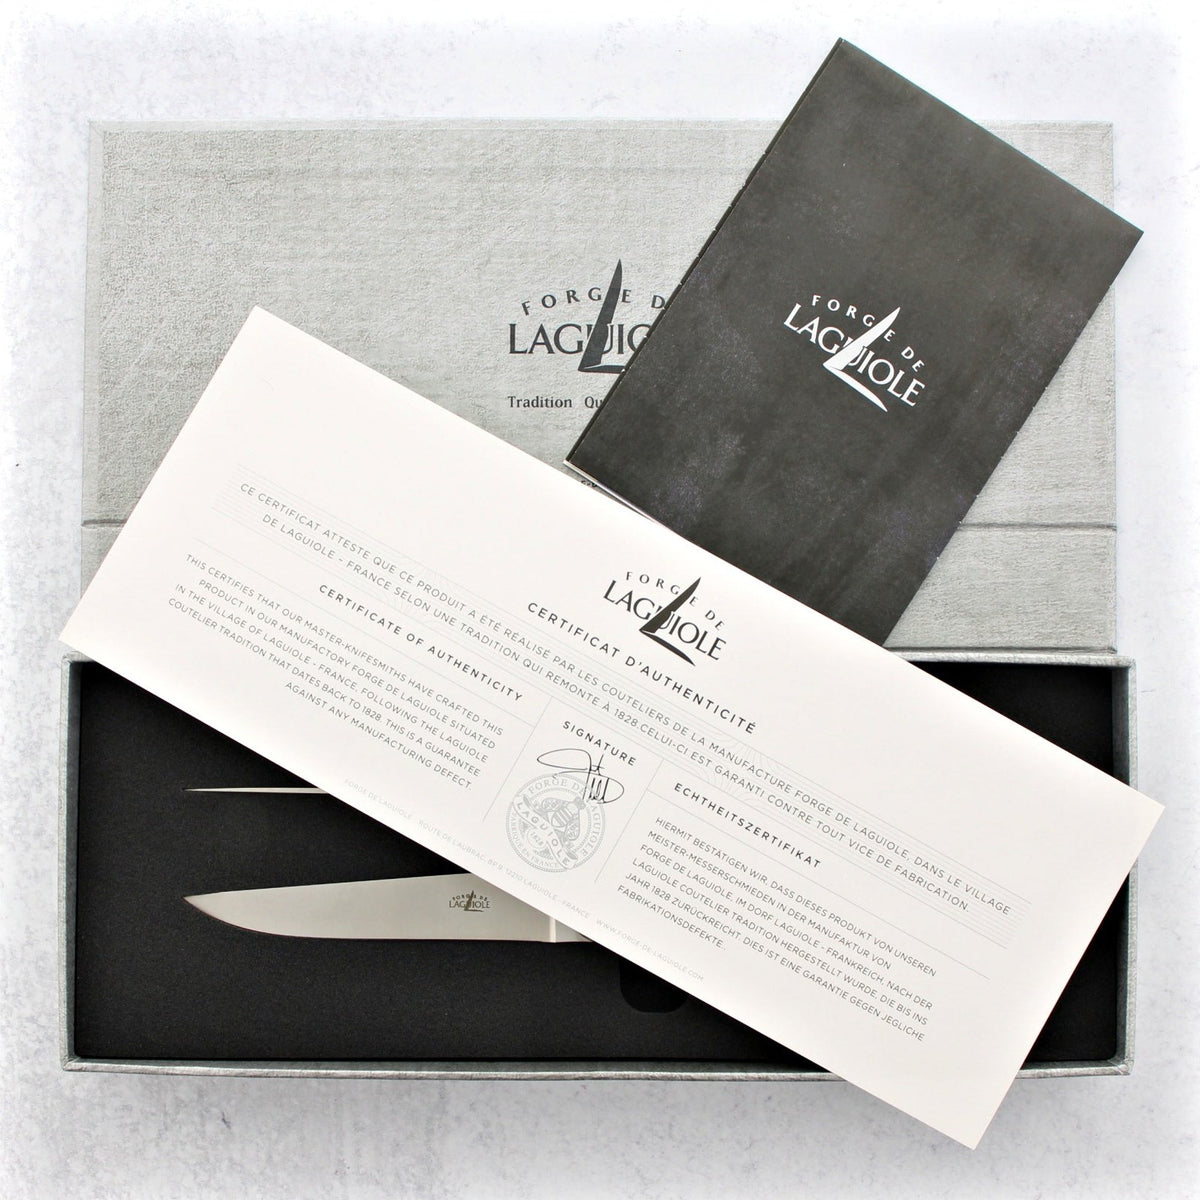 Forge de Laguiole Steak Knives - Fuchsia